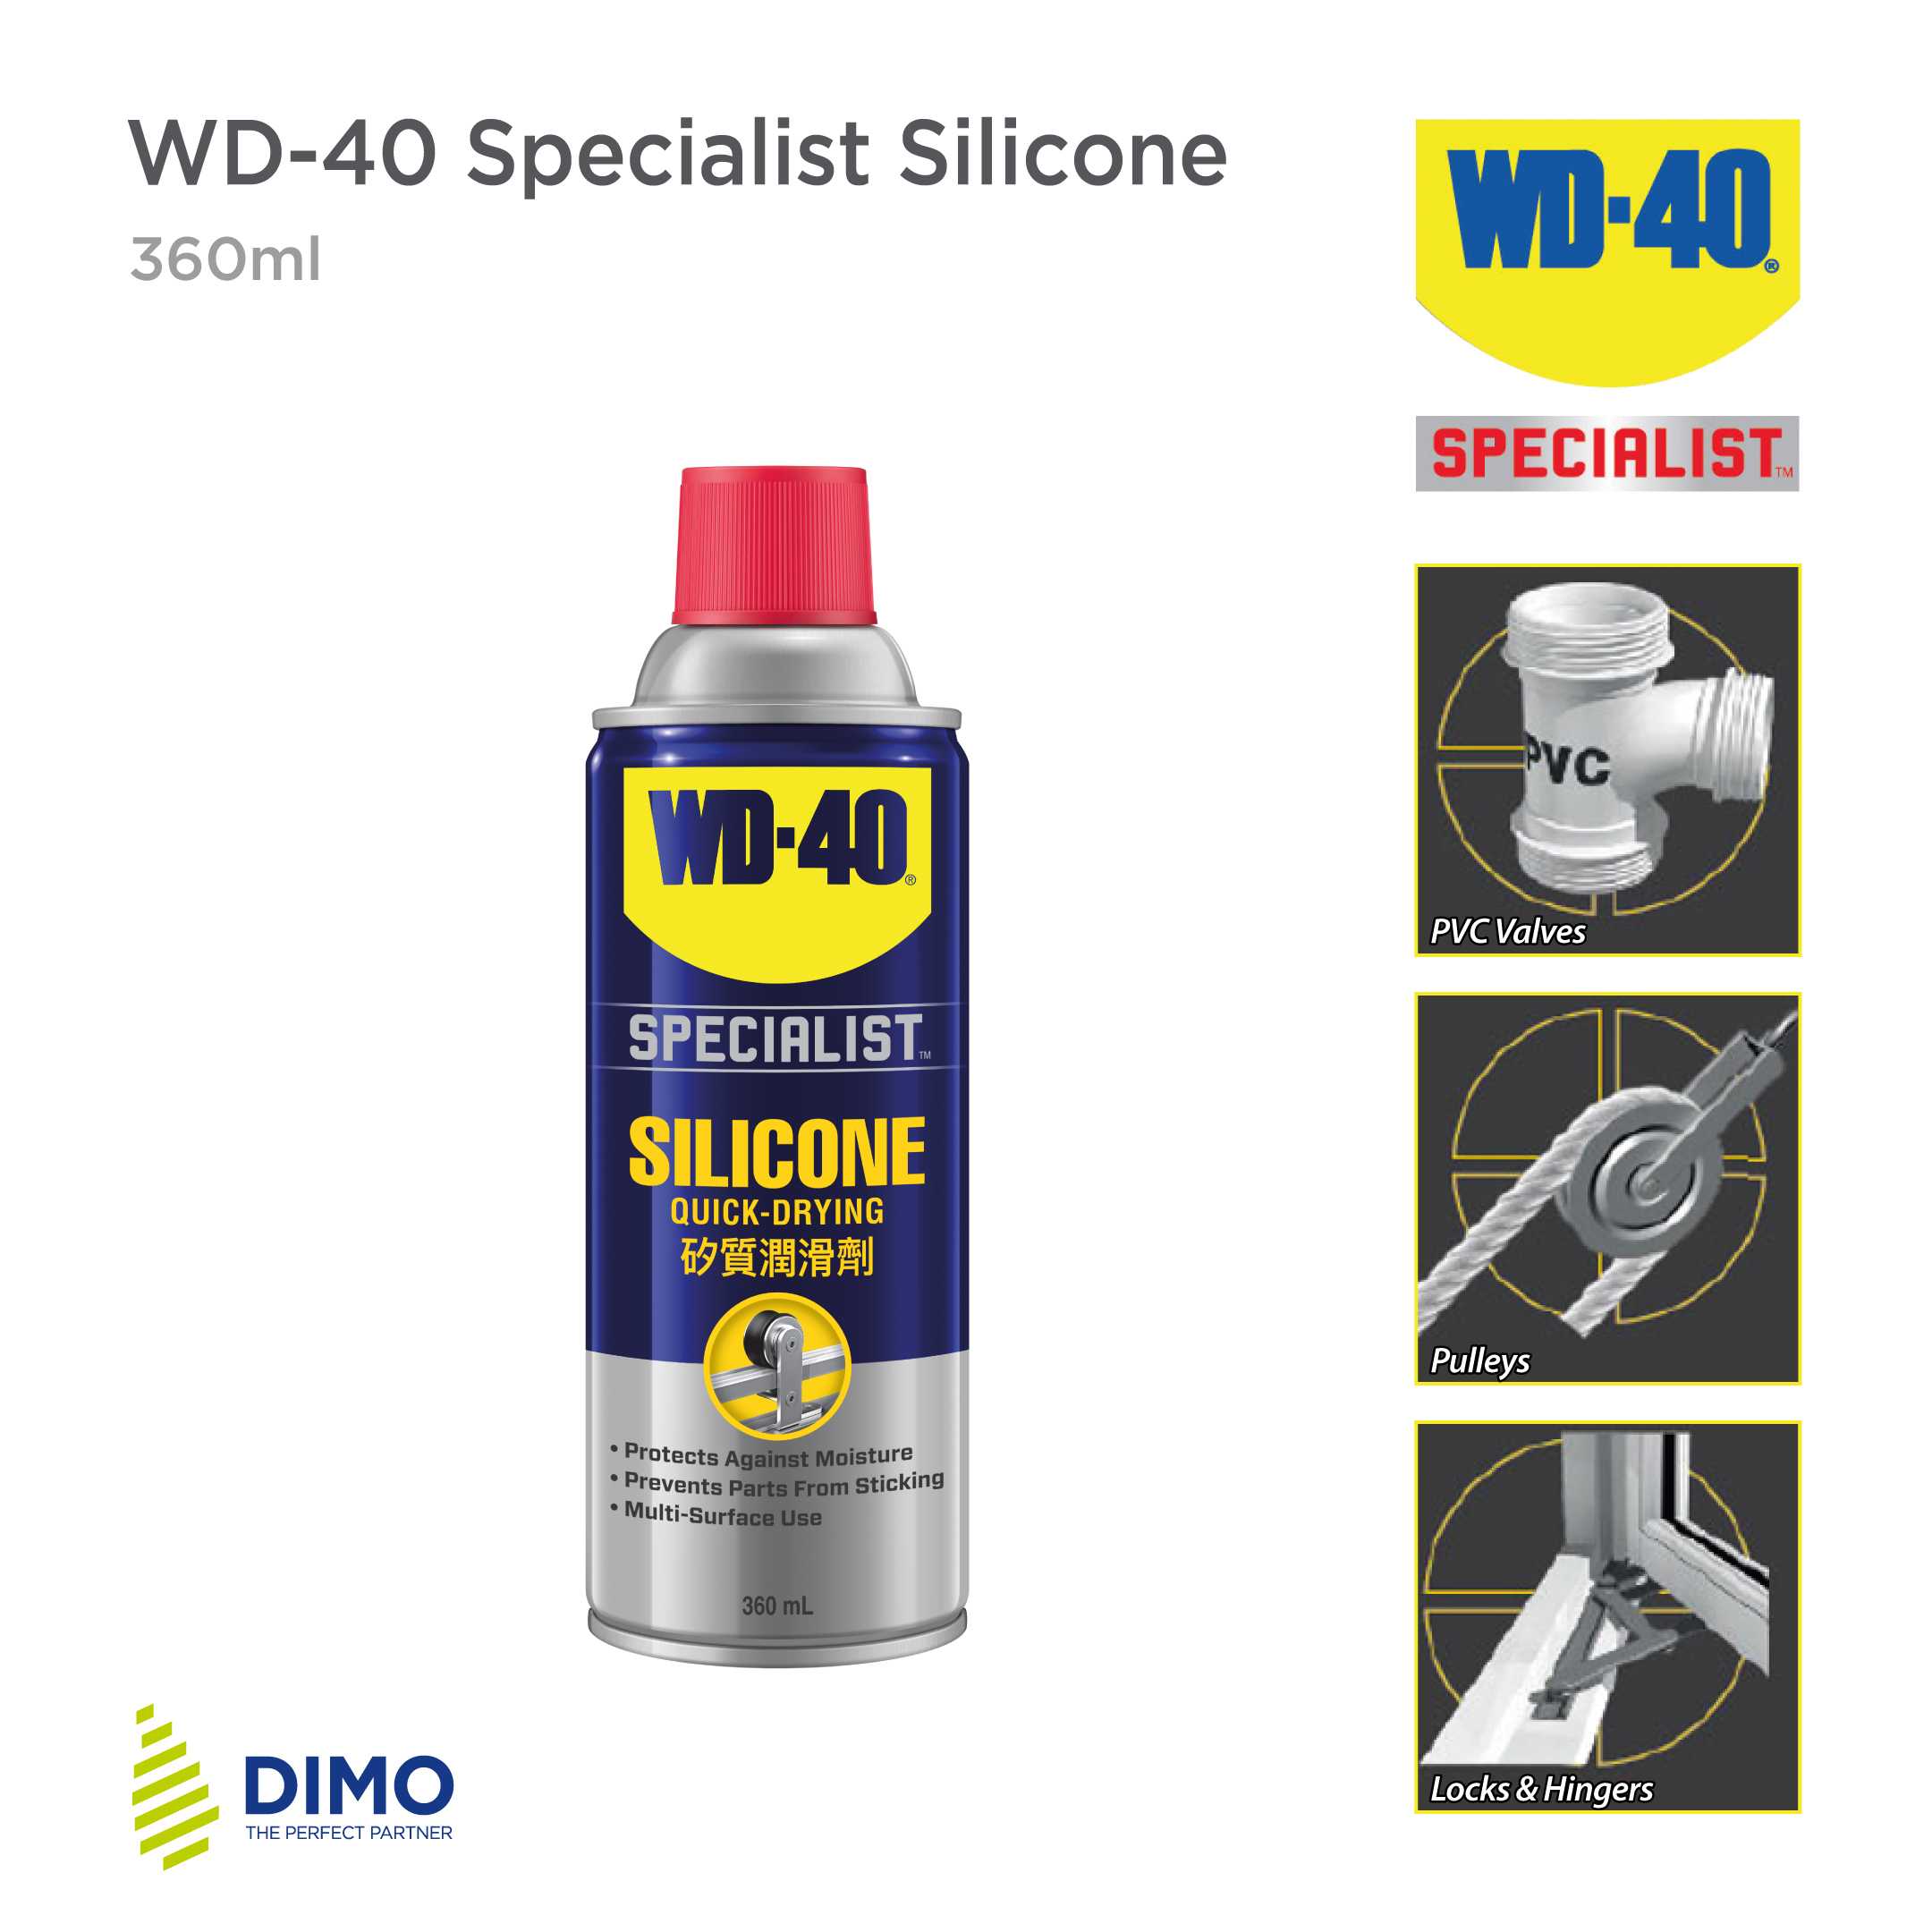 WD-40-Specialist-Silicone-360ml copy